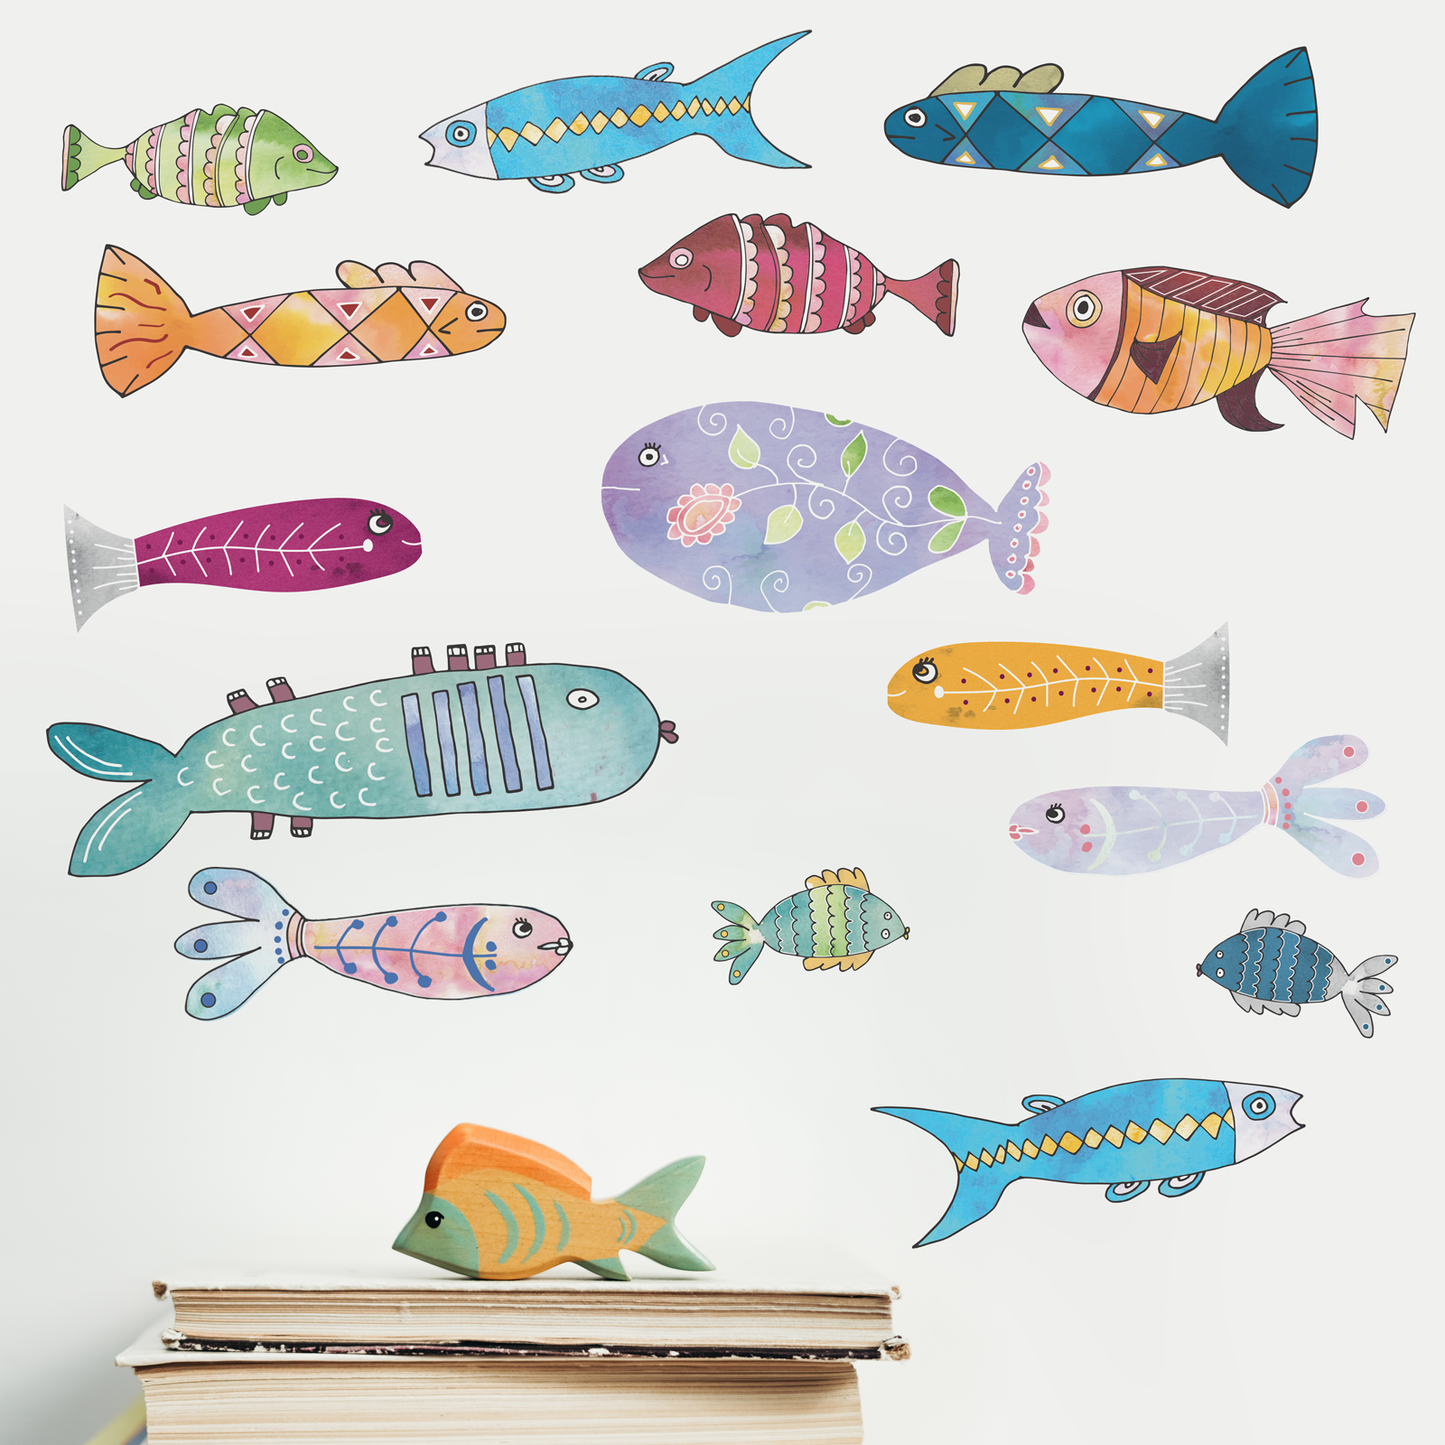 Folk Fish Decals ( Set of 16 ) - A Creative Hart